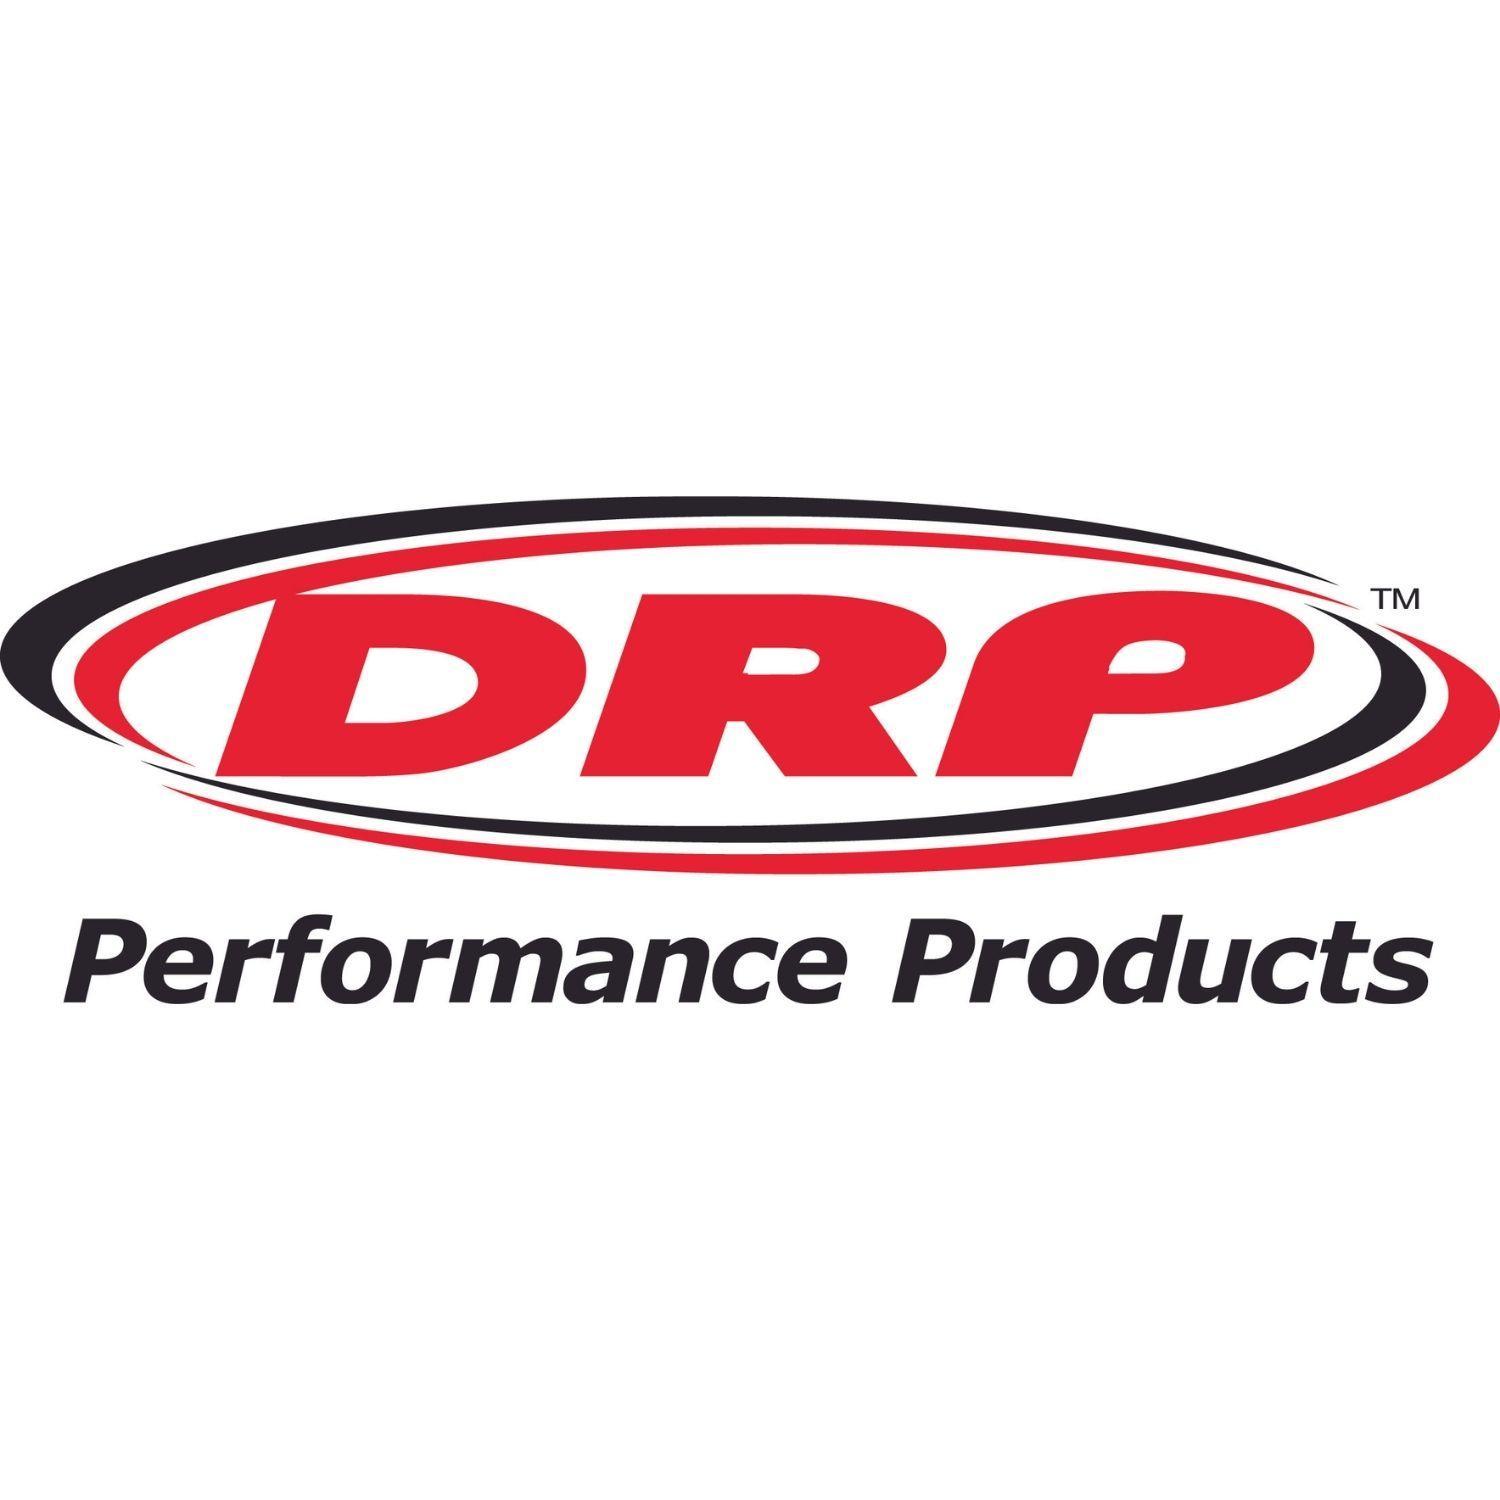 DRP Performance